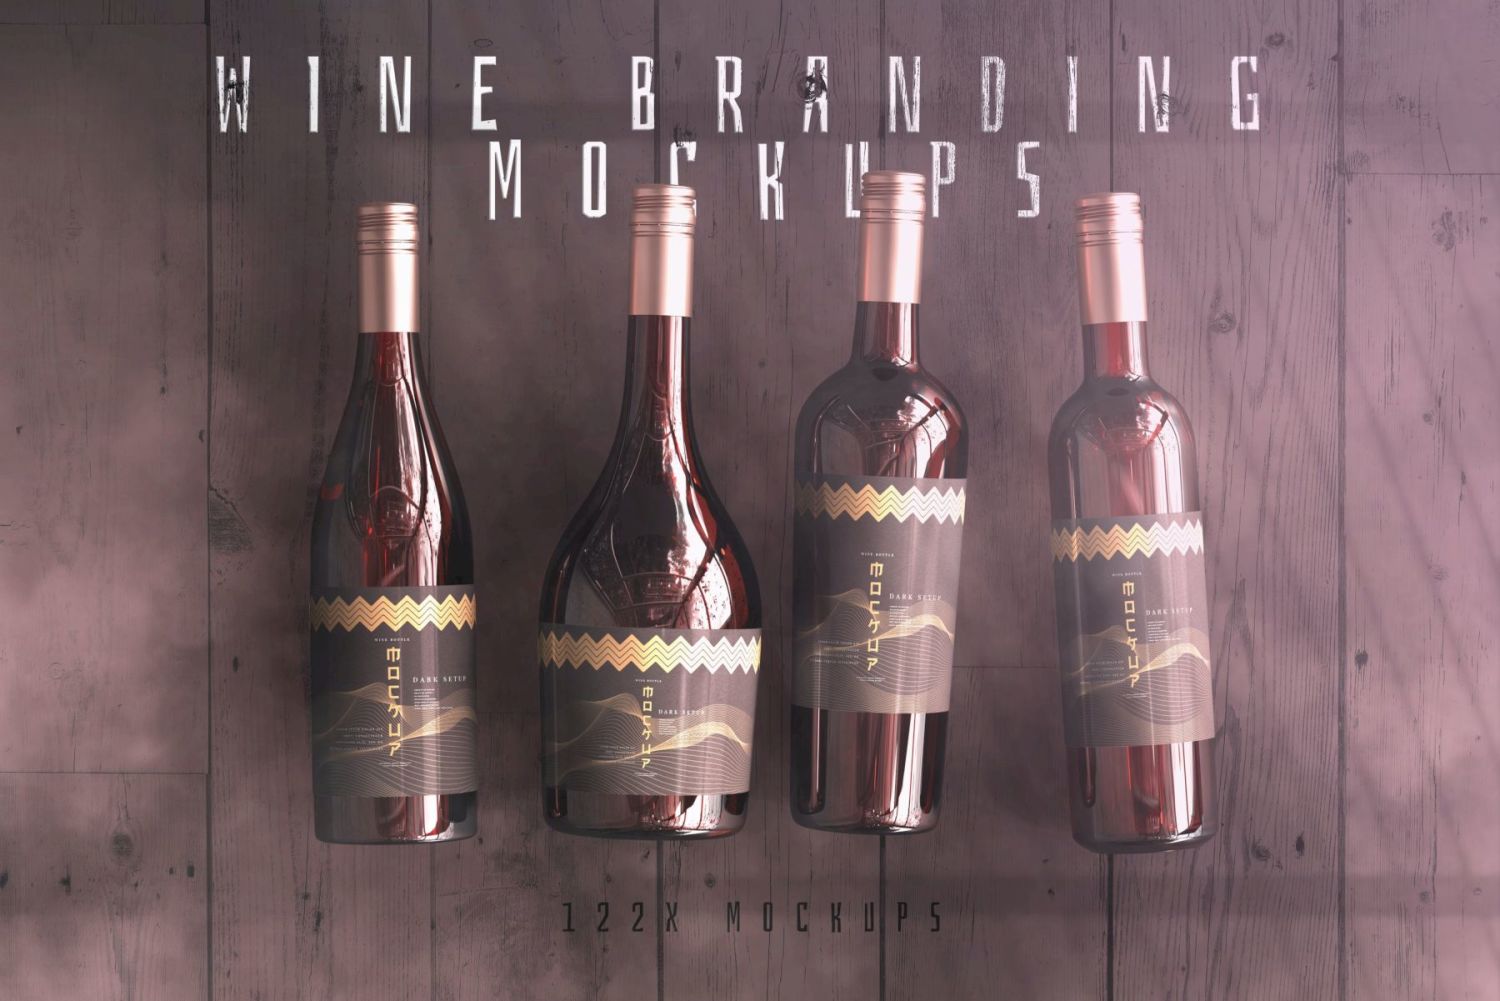 葡萄酒品牌样机系列 Wine Branding Mockup Collection插图